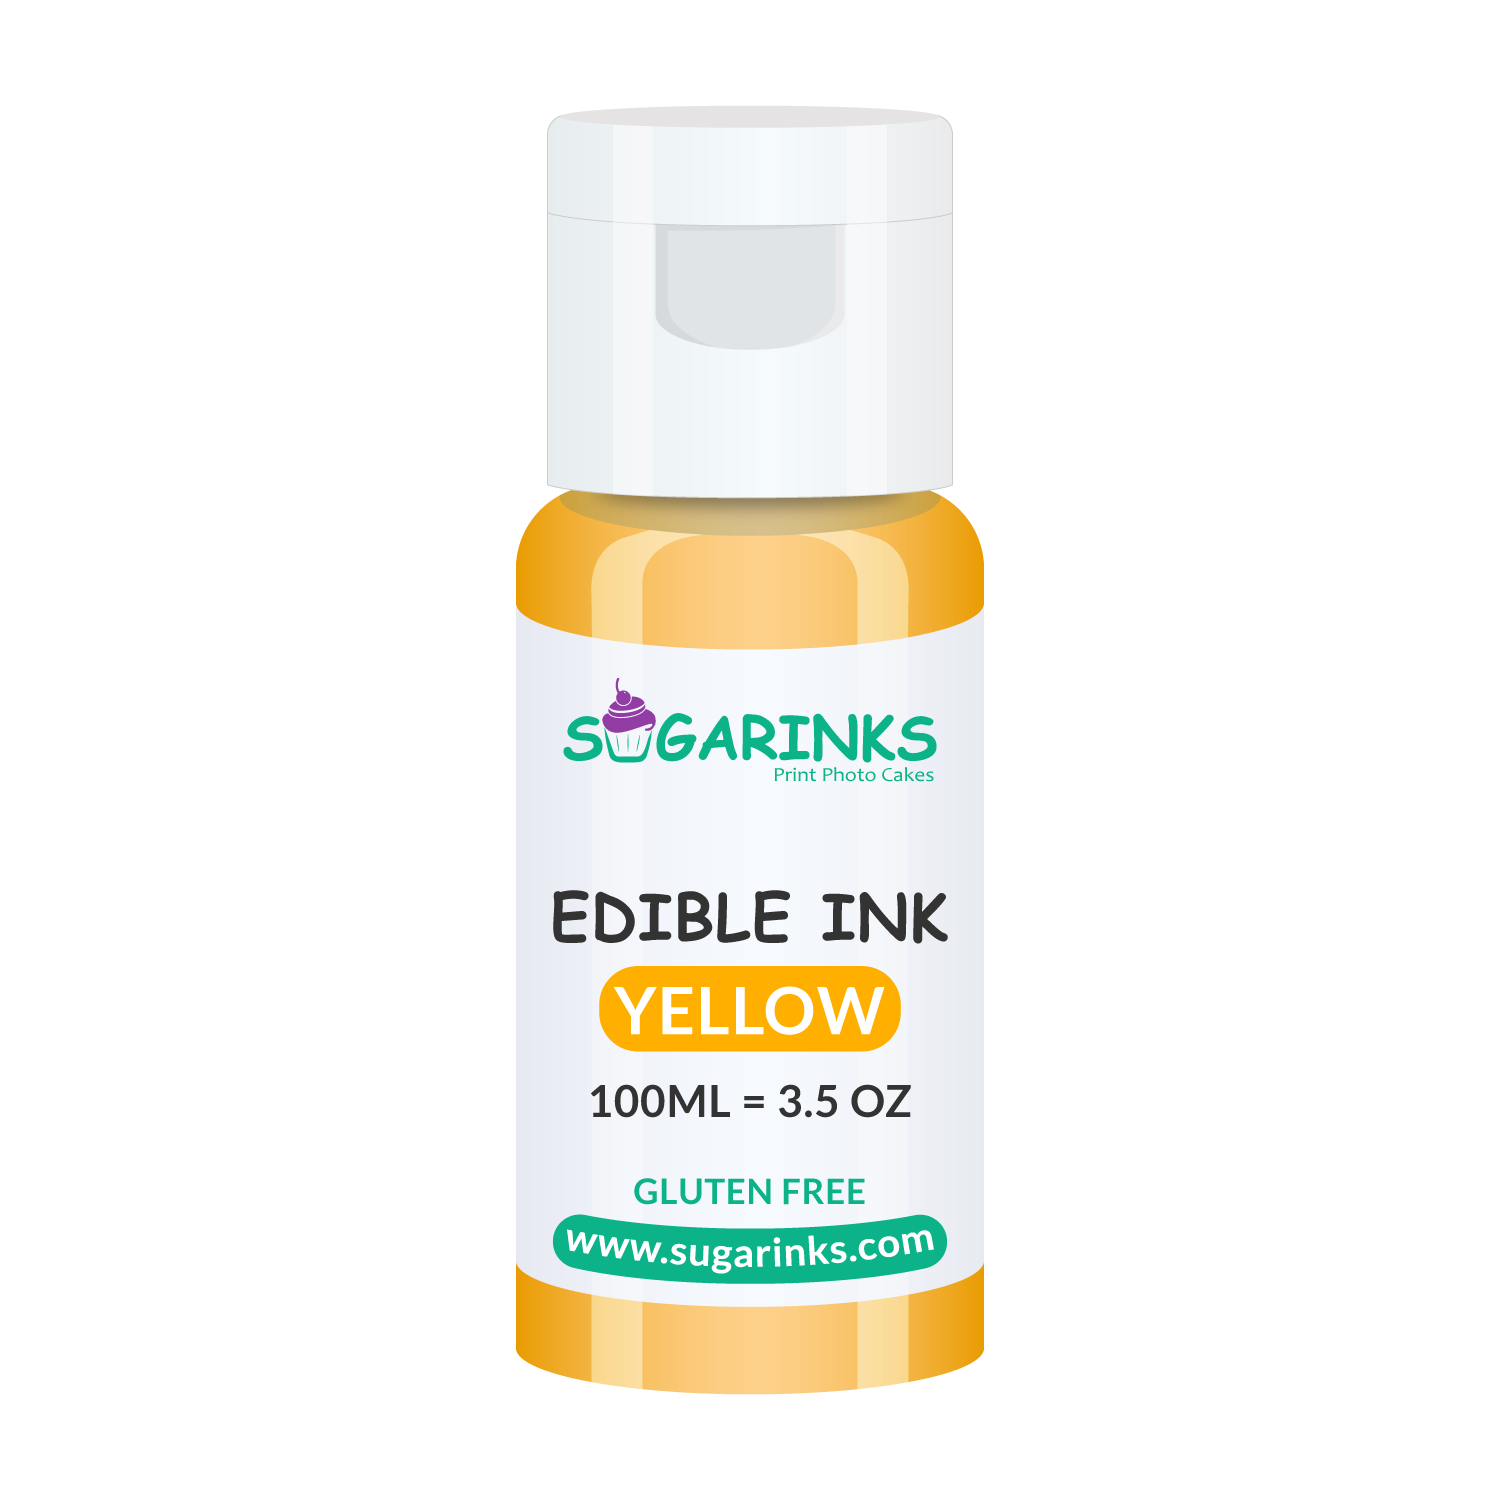 Sugarinks Edible Ink Refill for Epson Edible Printers (100ml/3.5Oz) – Yellow